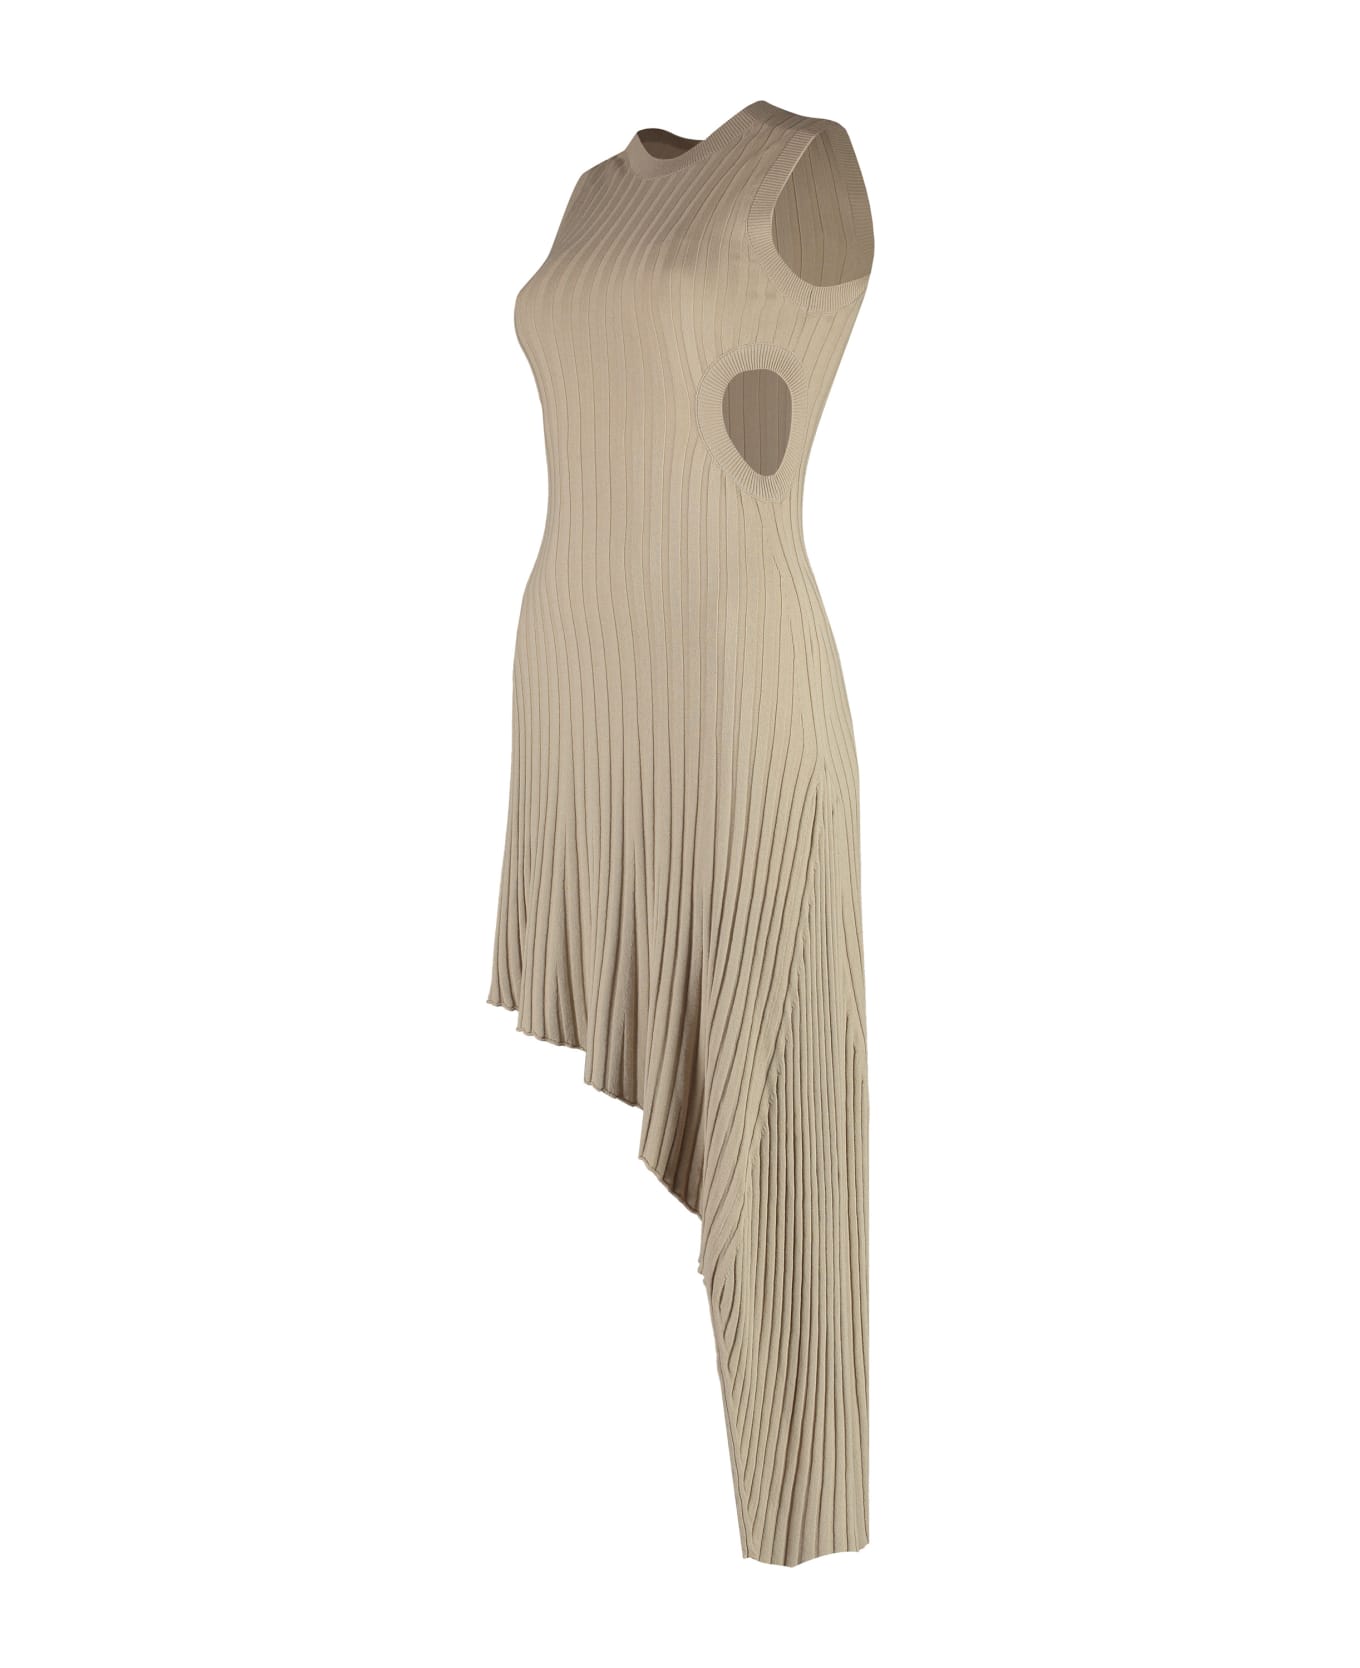 Stella McCartney Technical Rib Knit Dress - Sand